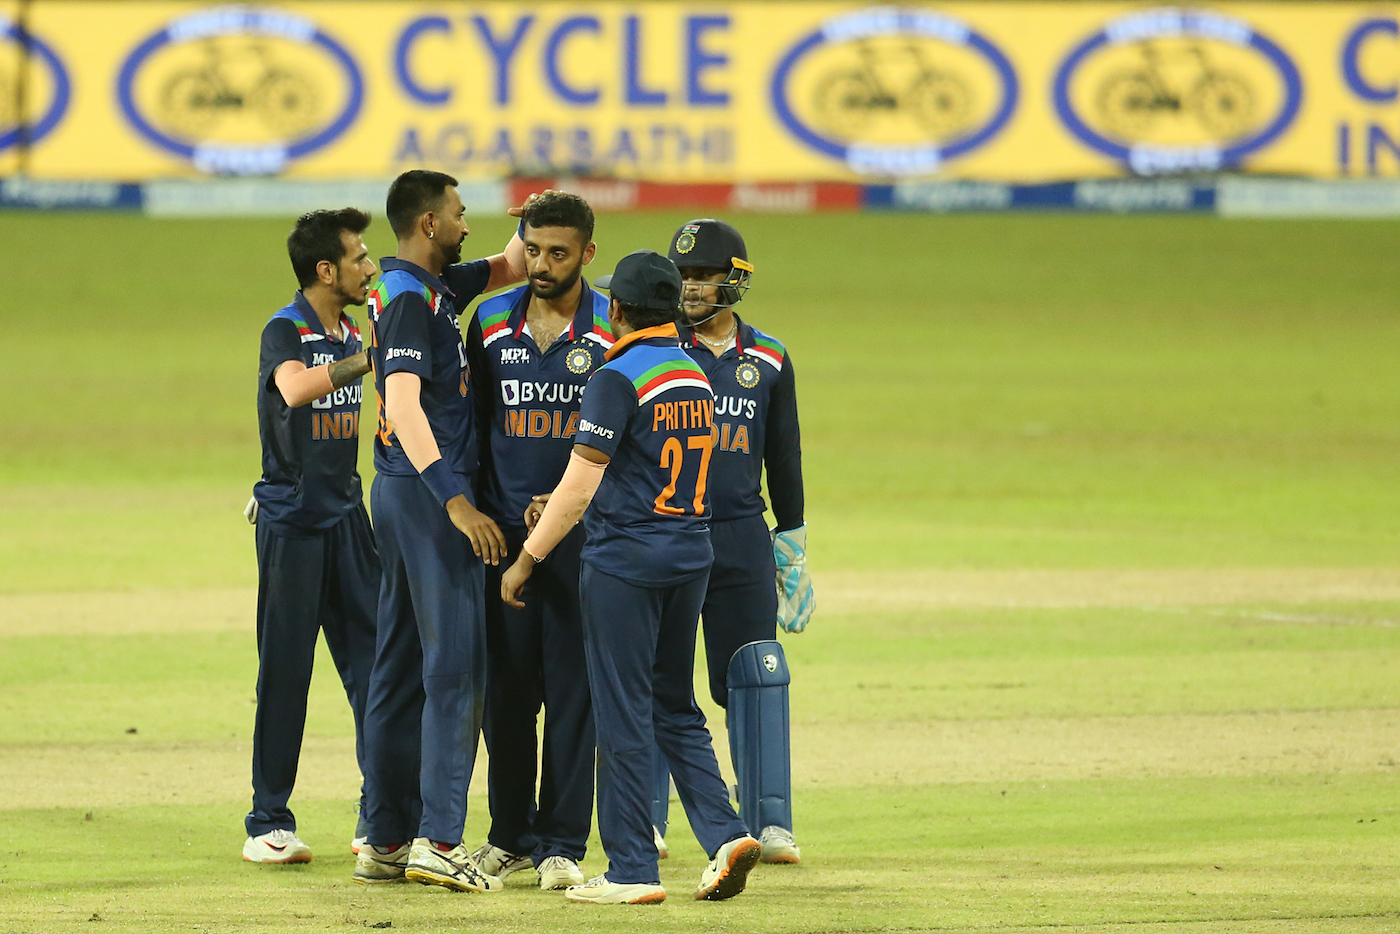 Sri Lanka vs India 2nd T20I: Match Prediction – Who Will Win The Match?